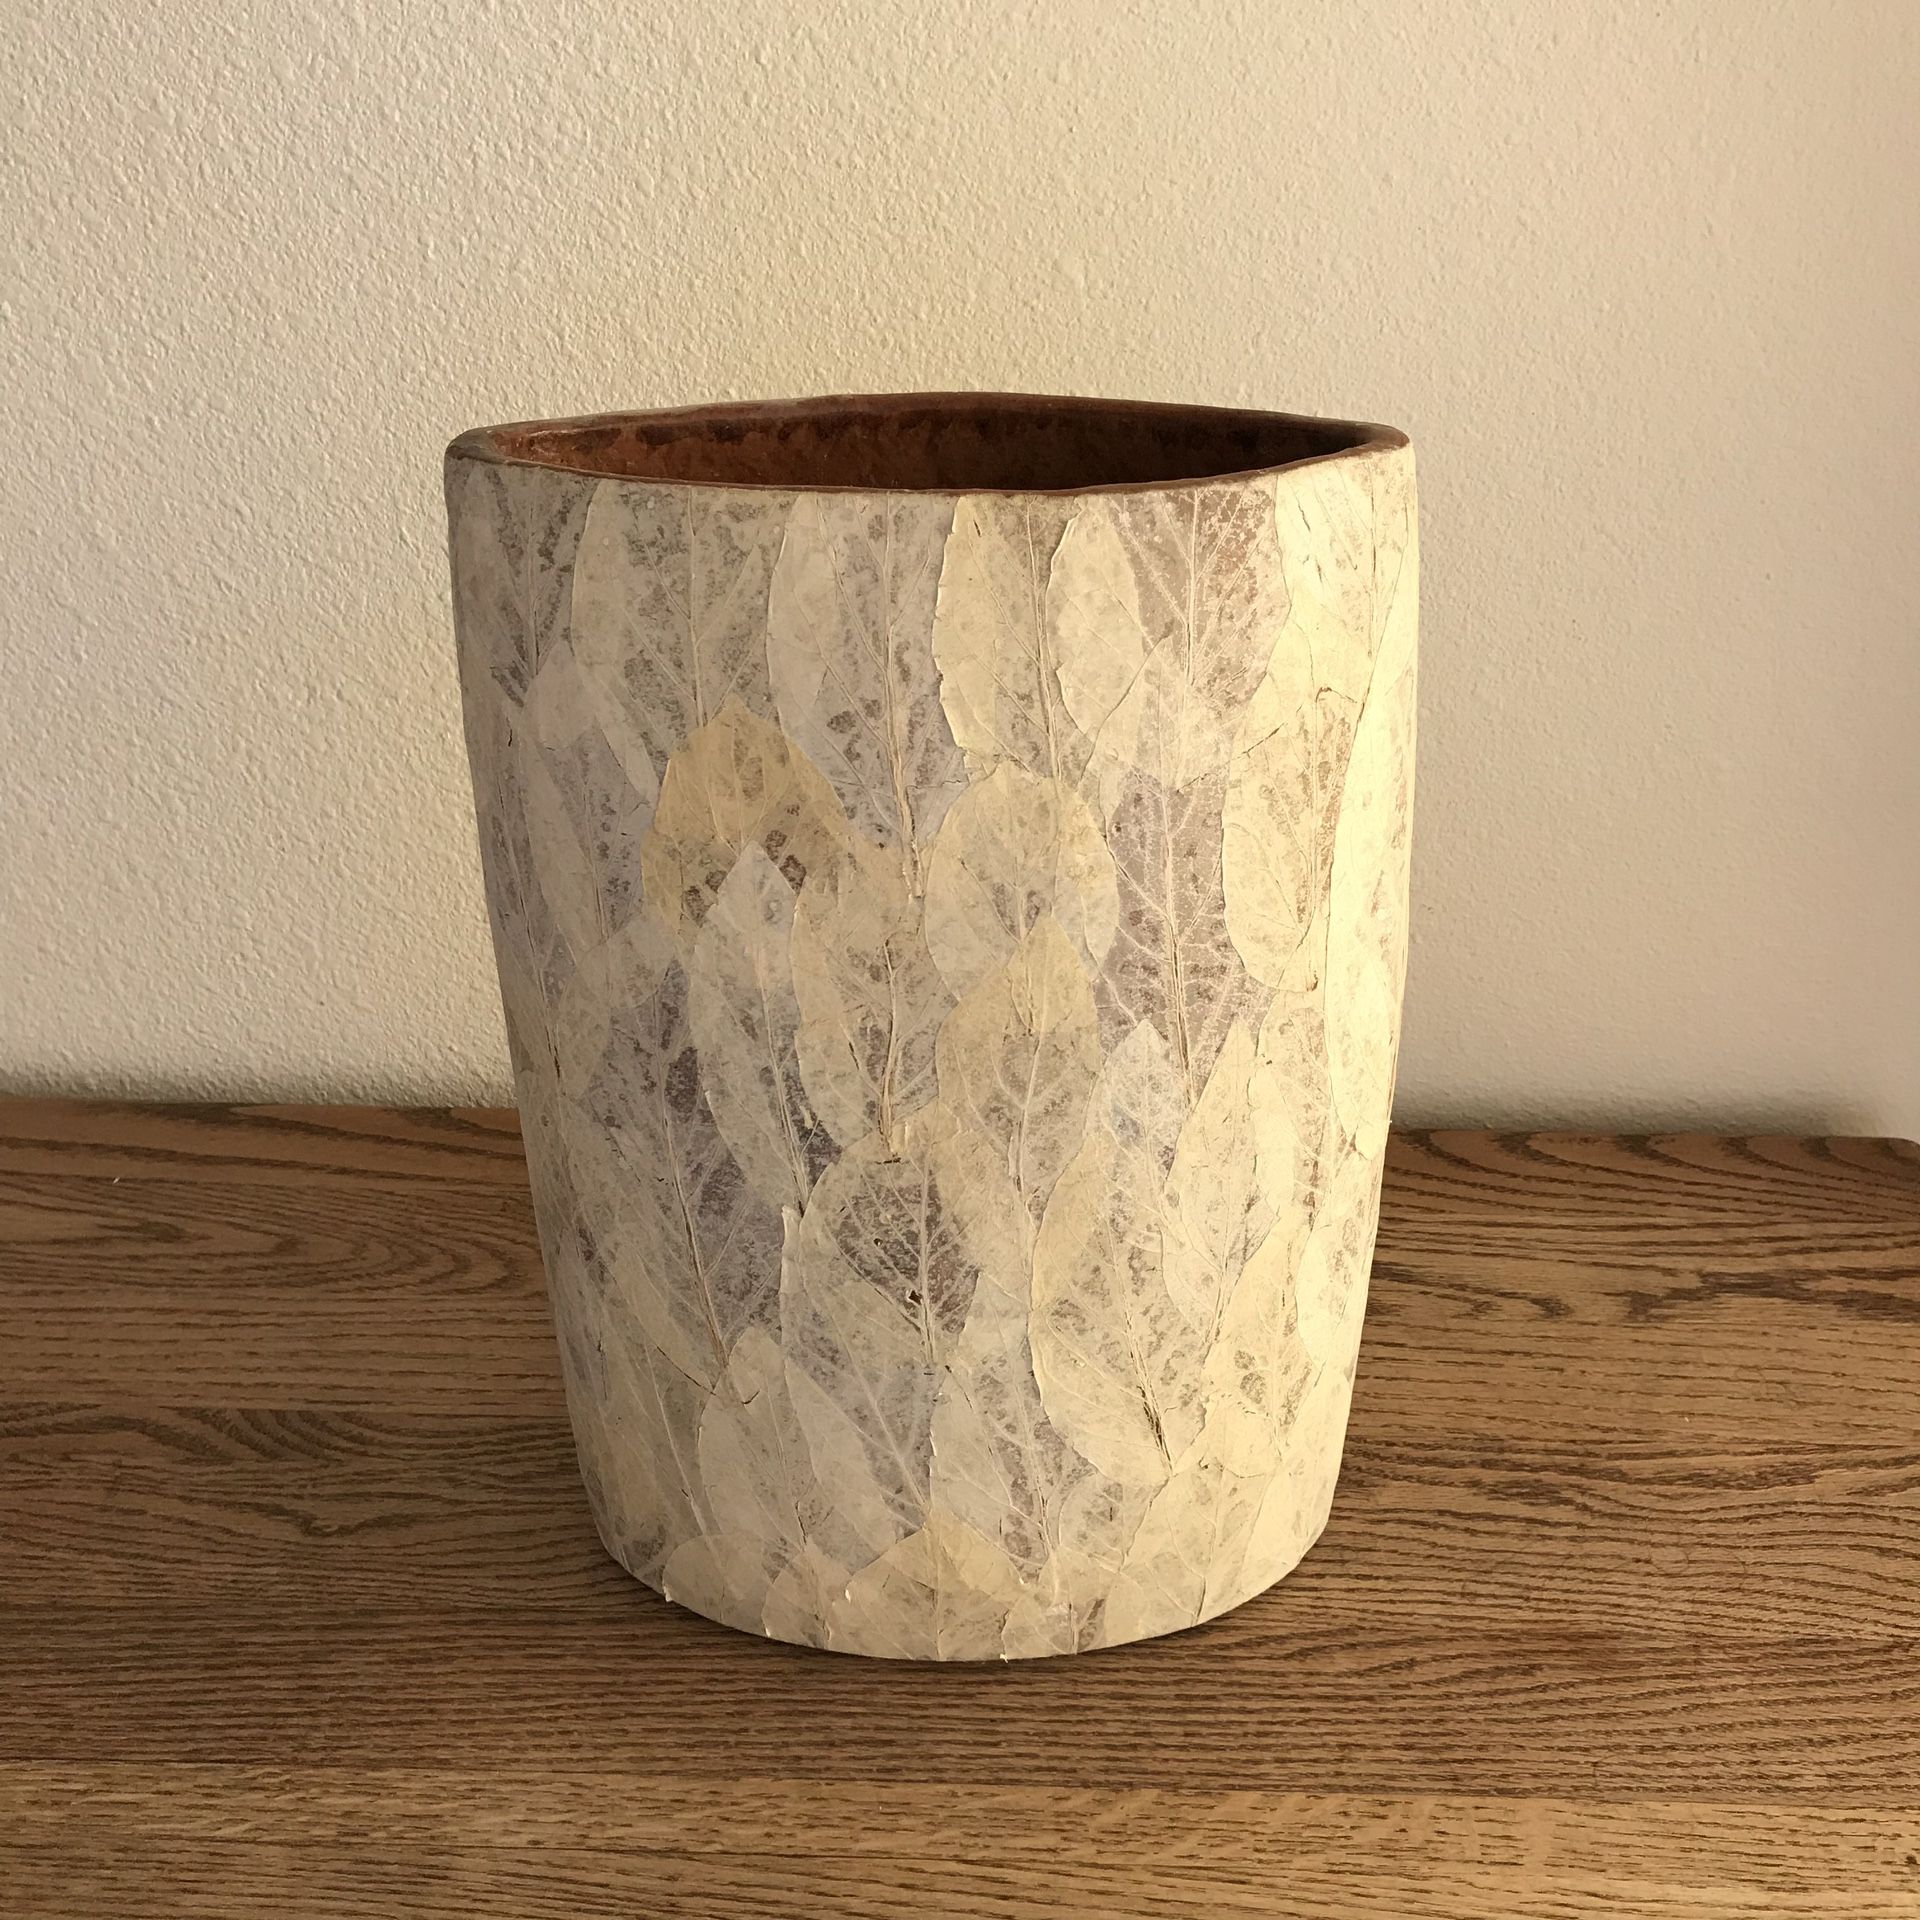 Ceramic Vase World Market cost plus leaf mosaic design 15” tall 11” wide opening 3 1/2”